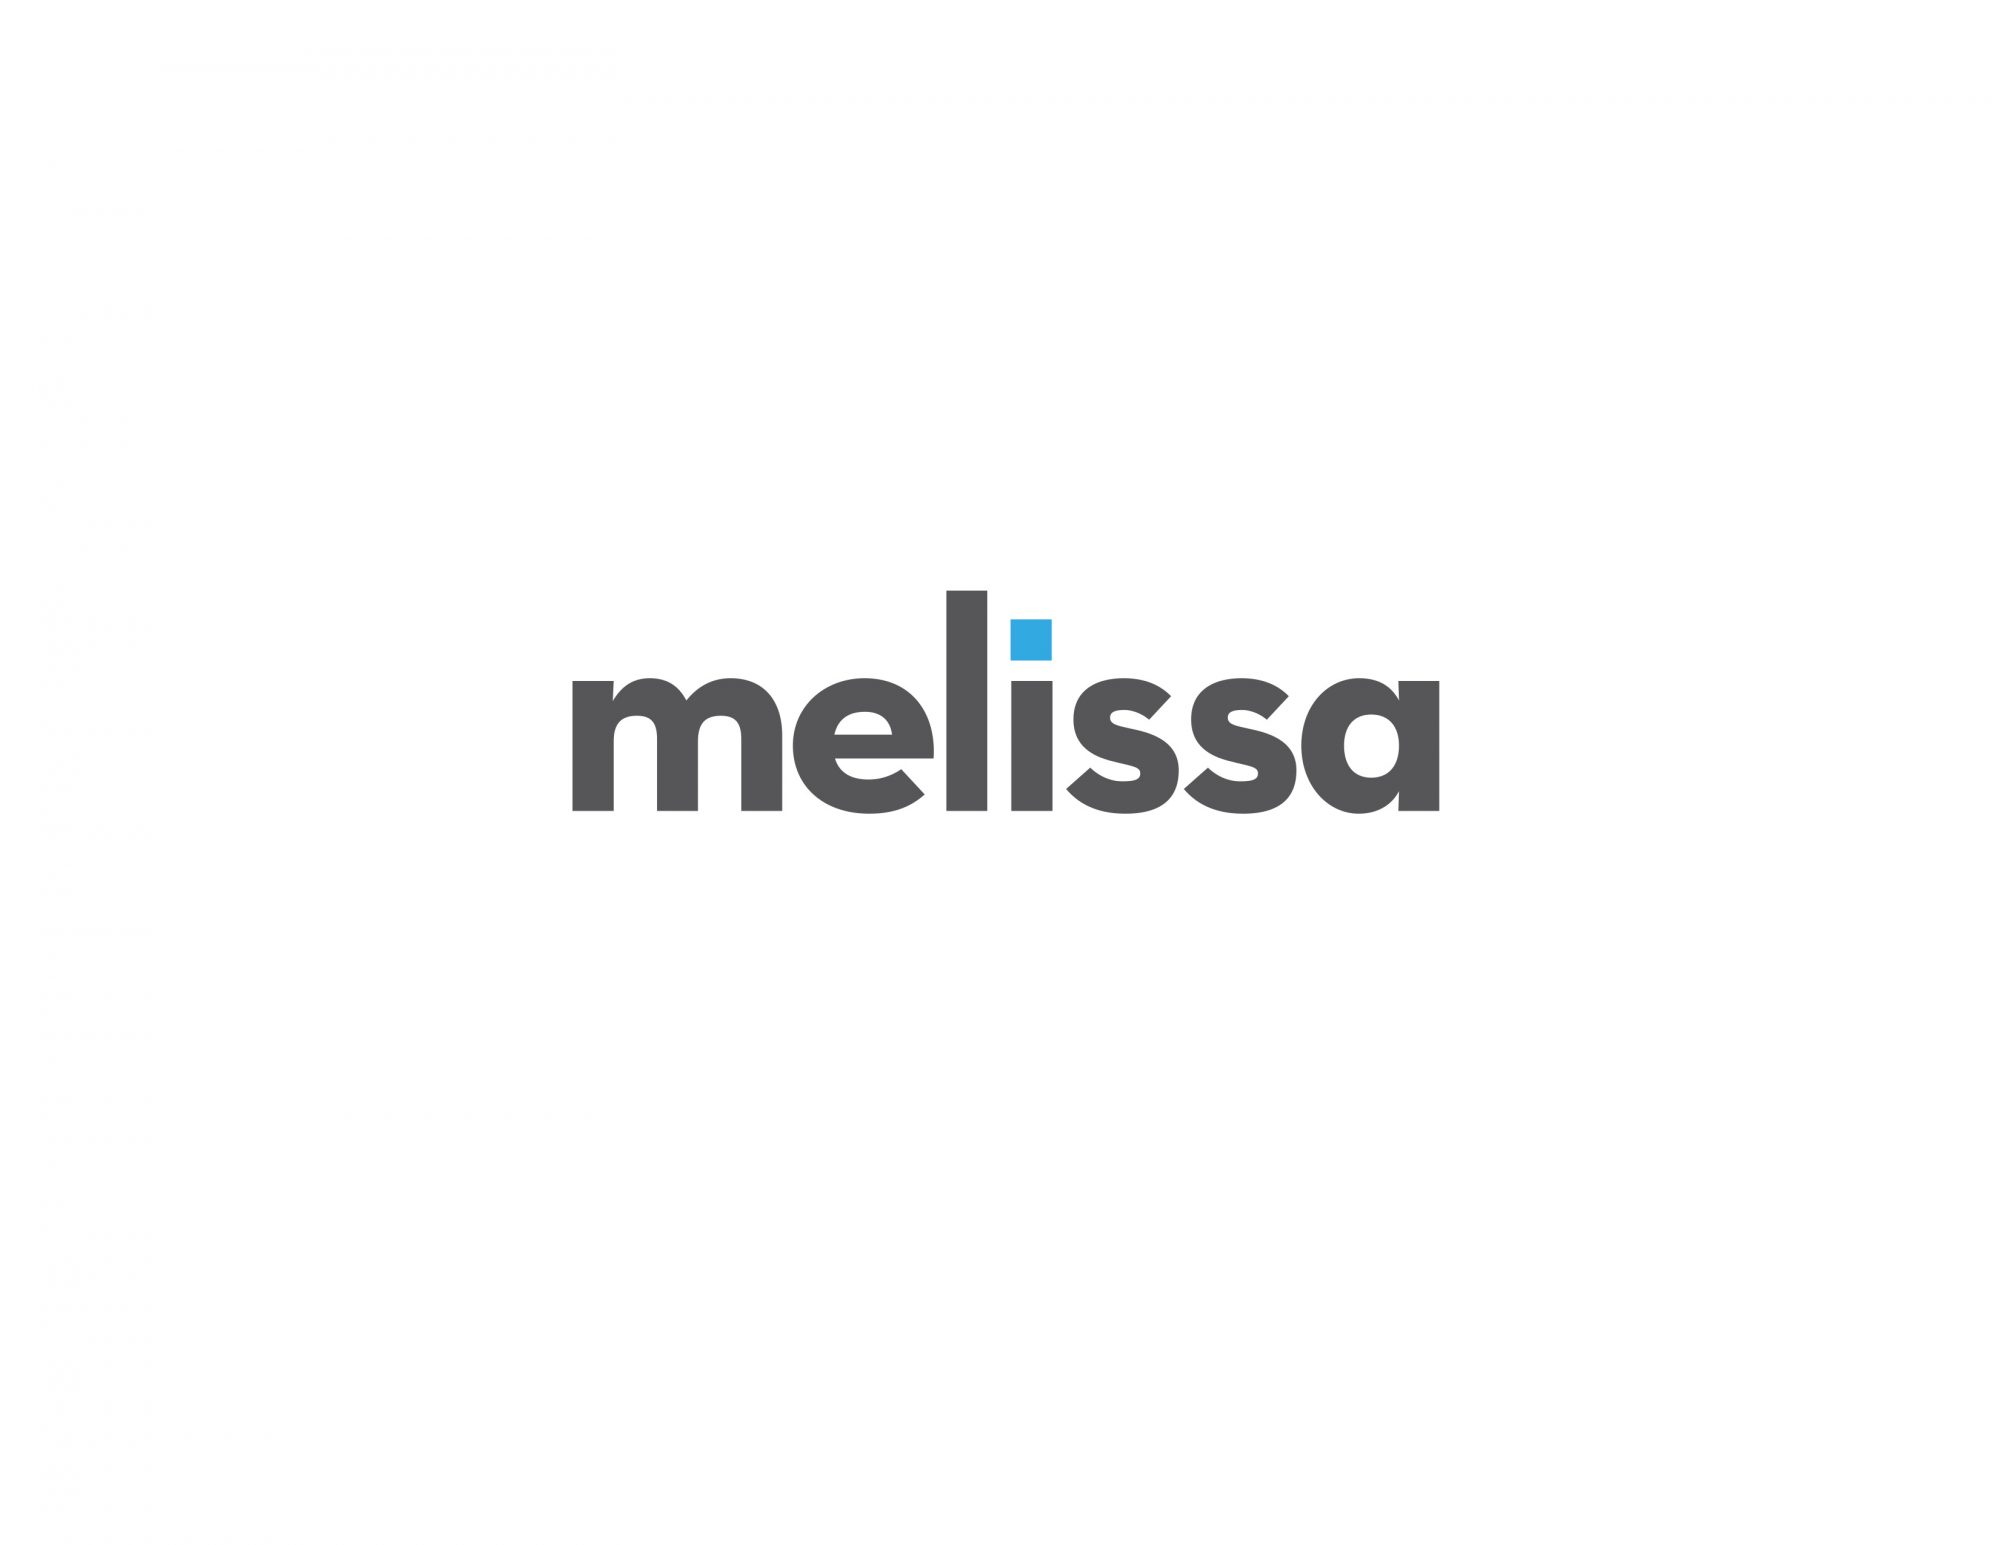 Melissa partners innoscale datarocket for datarocket core mdm software solutions